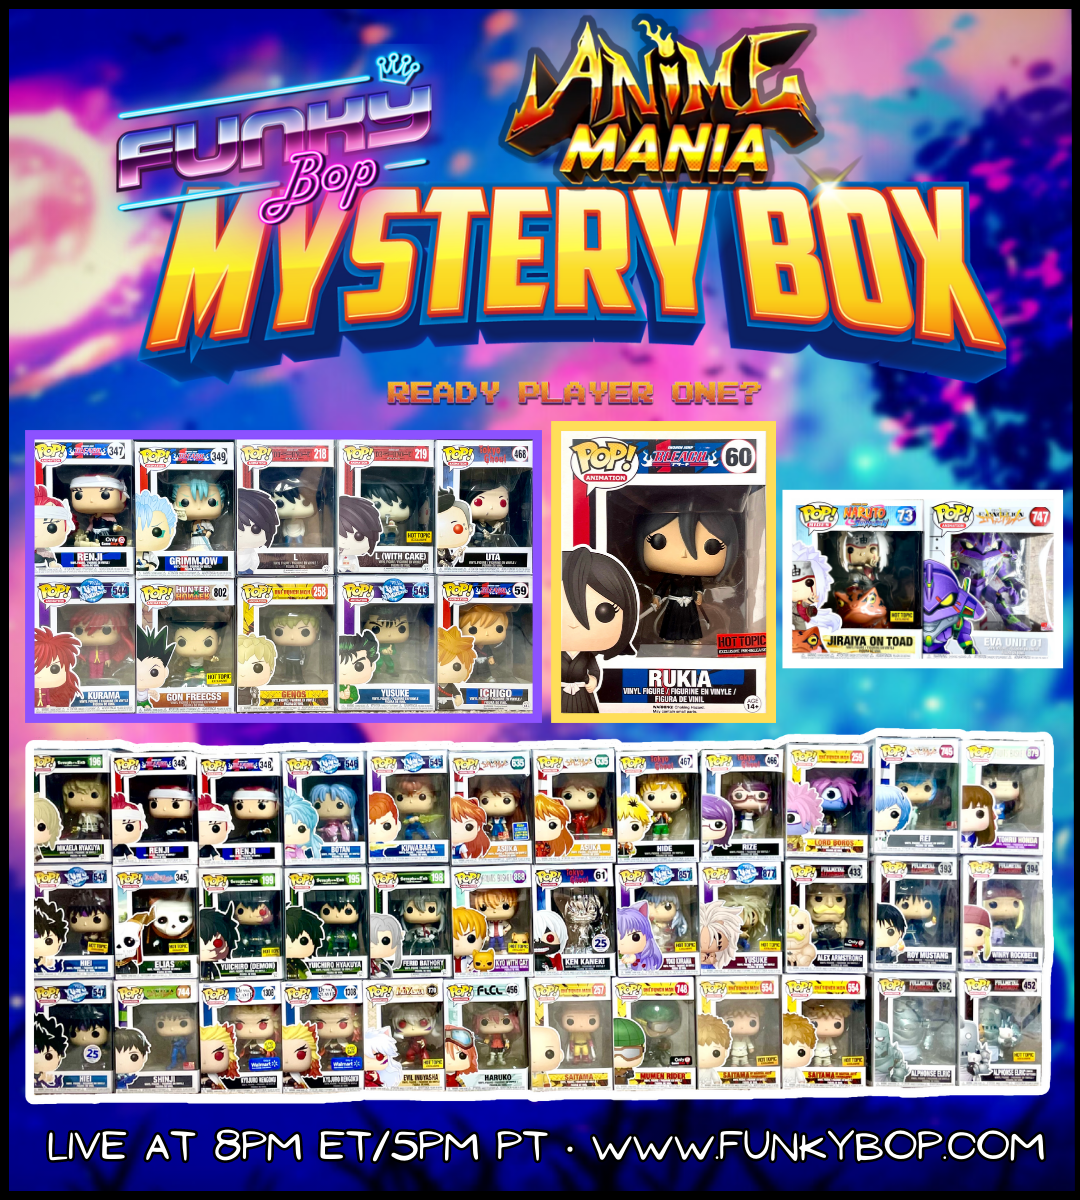 Funky Bop ANIME MANIA Mystery Box - 8.18